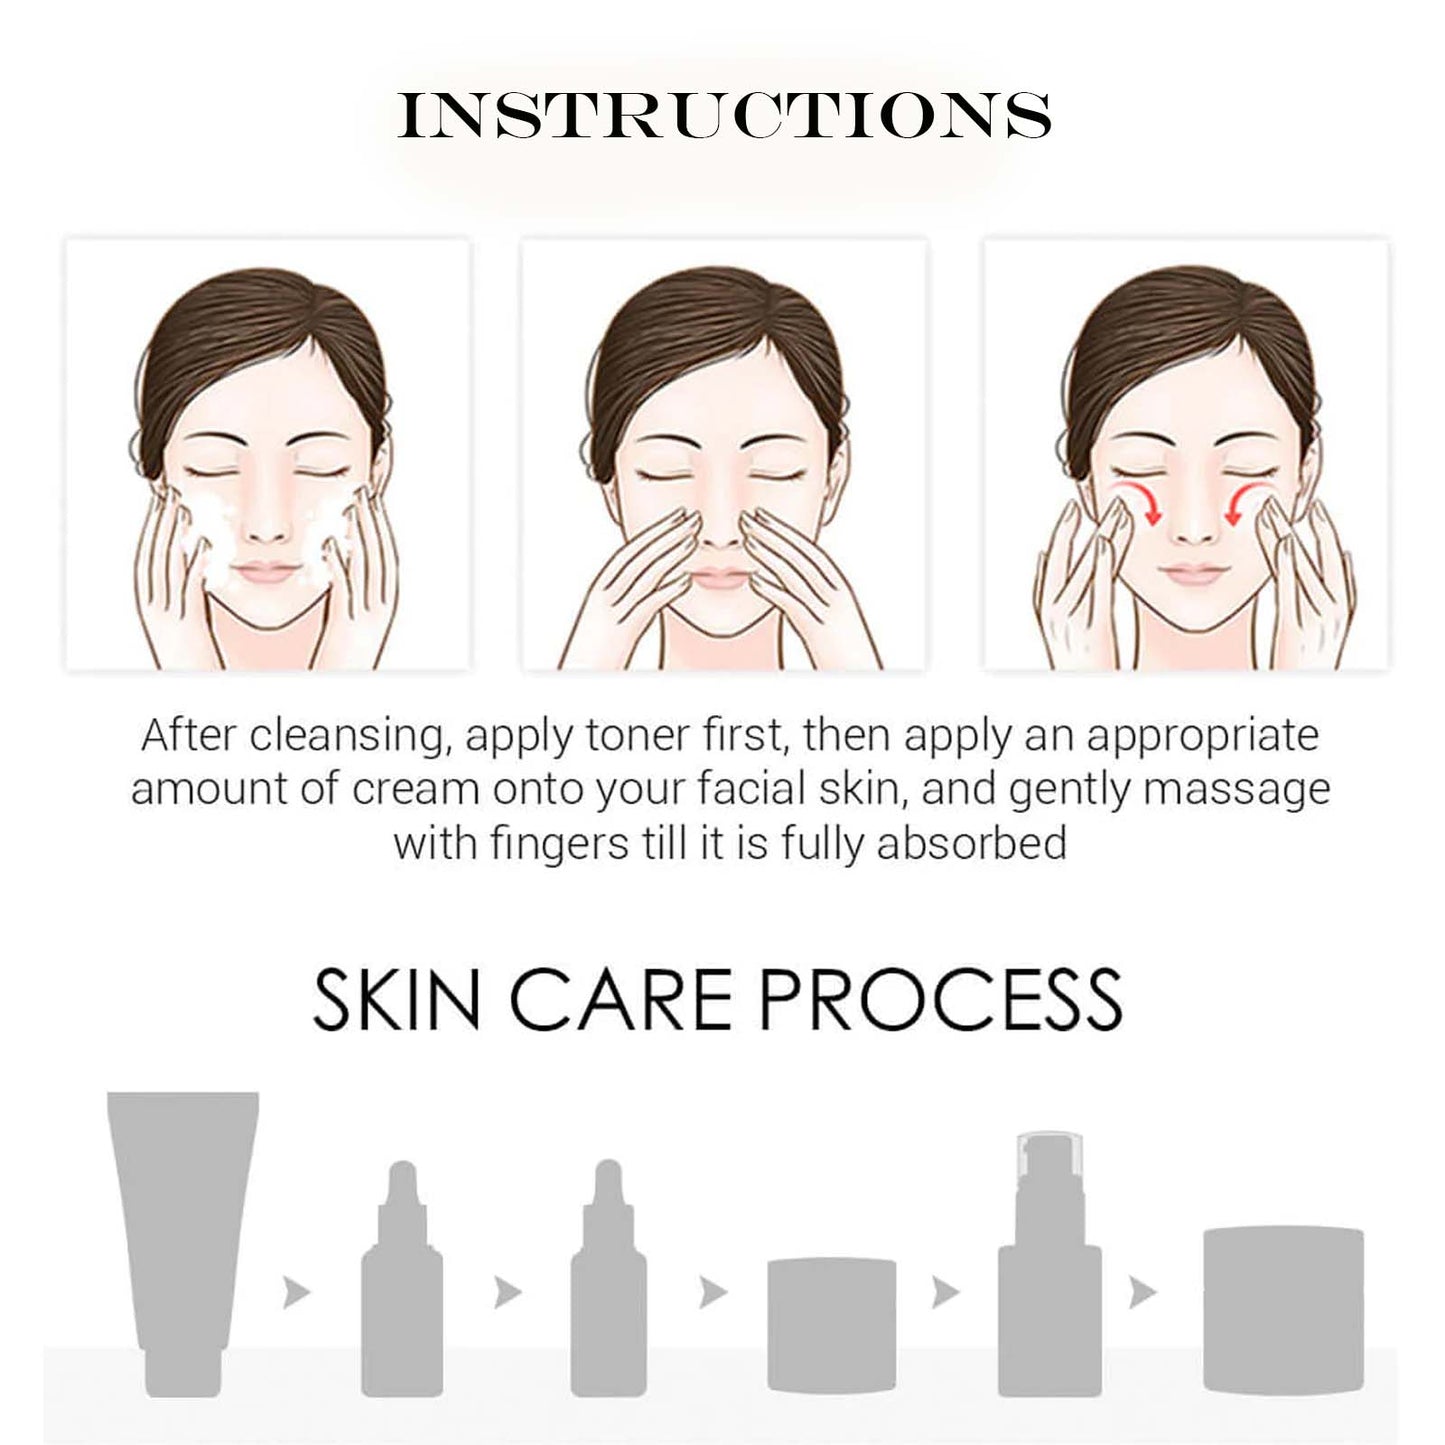 Refined Skin Care Moisturizer Cream